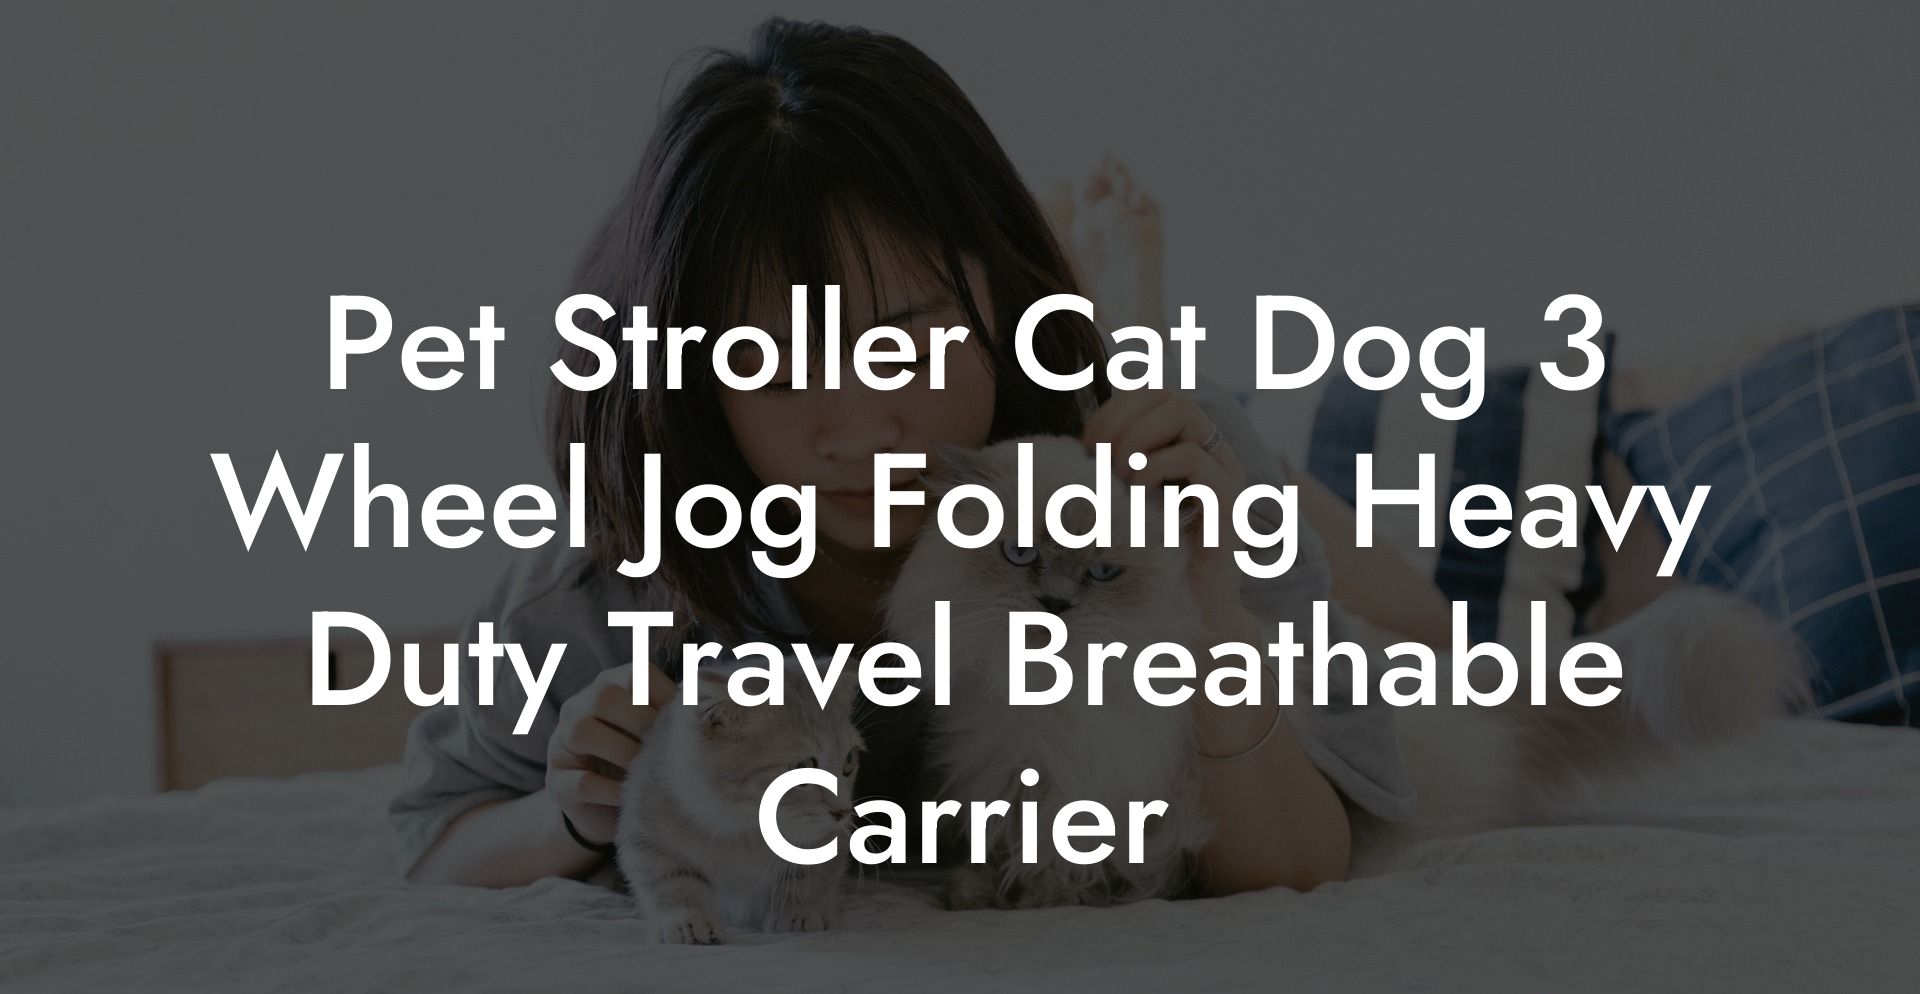 Pet Stroller Cat Dog 3 Wheel Jog Folding Heavy Duty Travel Breathable Carrier